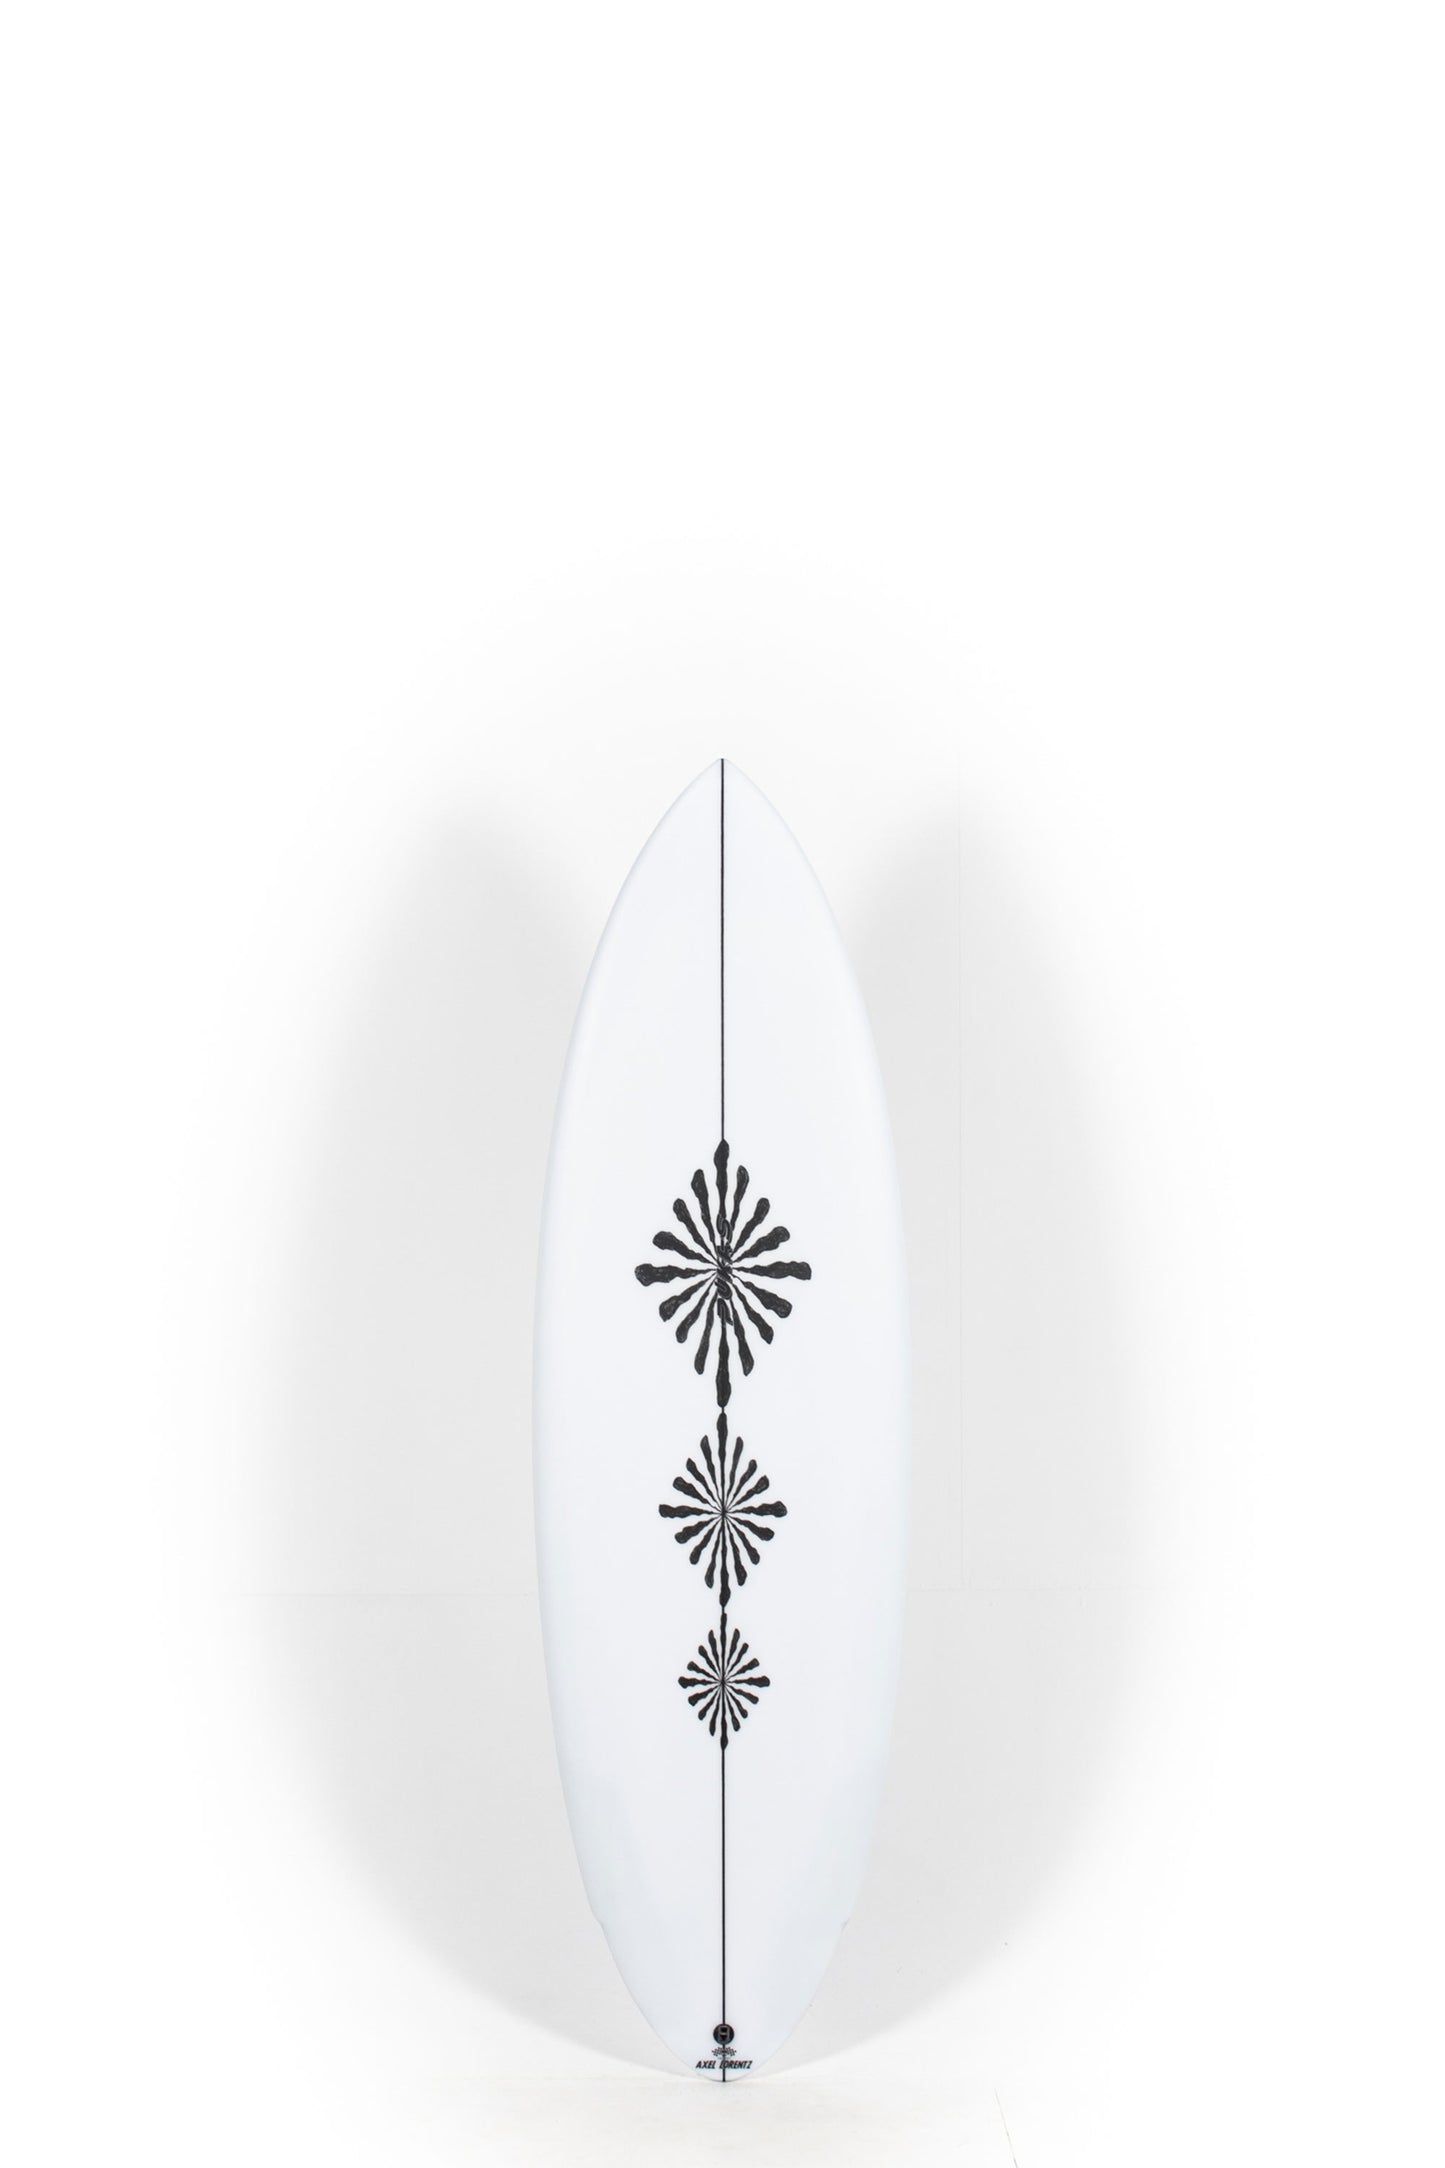 Pukas Surf Shop - Pukas Surfboards - ACID PLAN by Axel Lorentz -  5'8" x 19,75 x 2,40 x 29,42L - AX08521